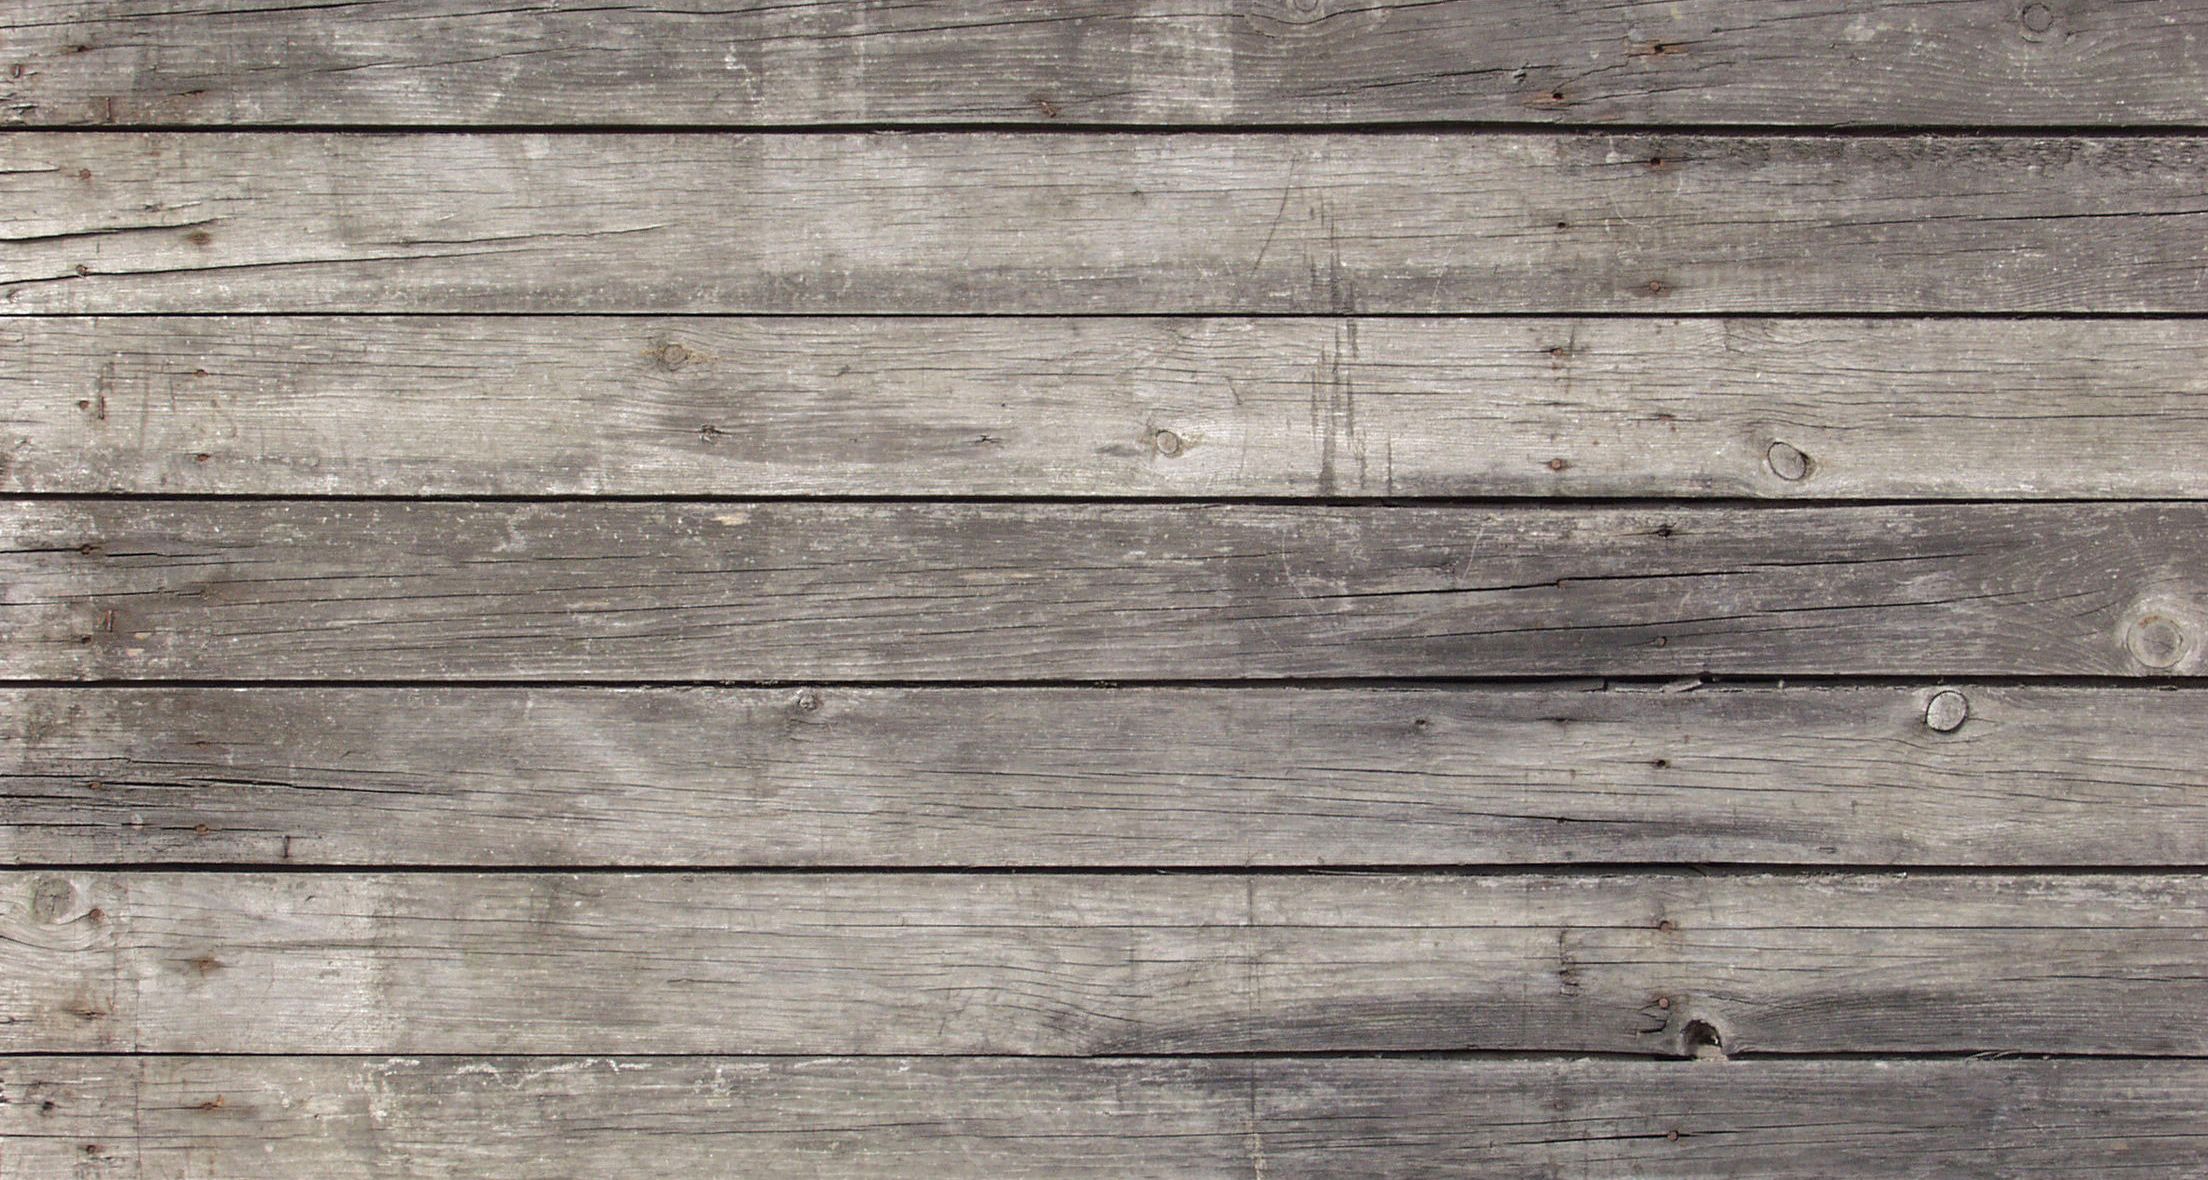 plank-wooden-texture.jpg (2208×1180) | Board | Pinterest | Rustic ...